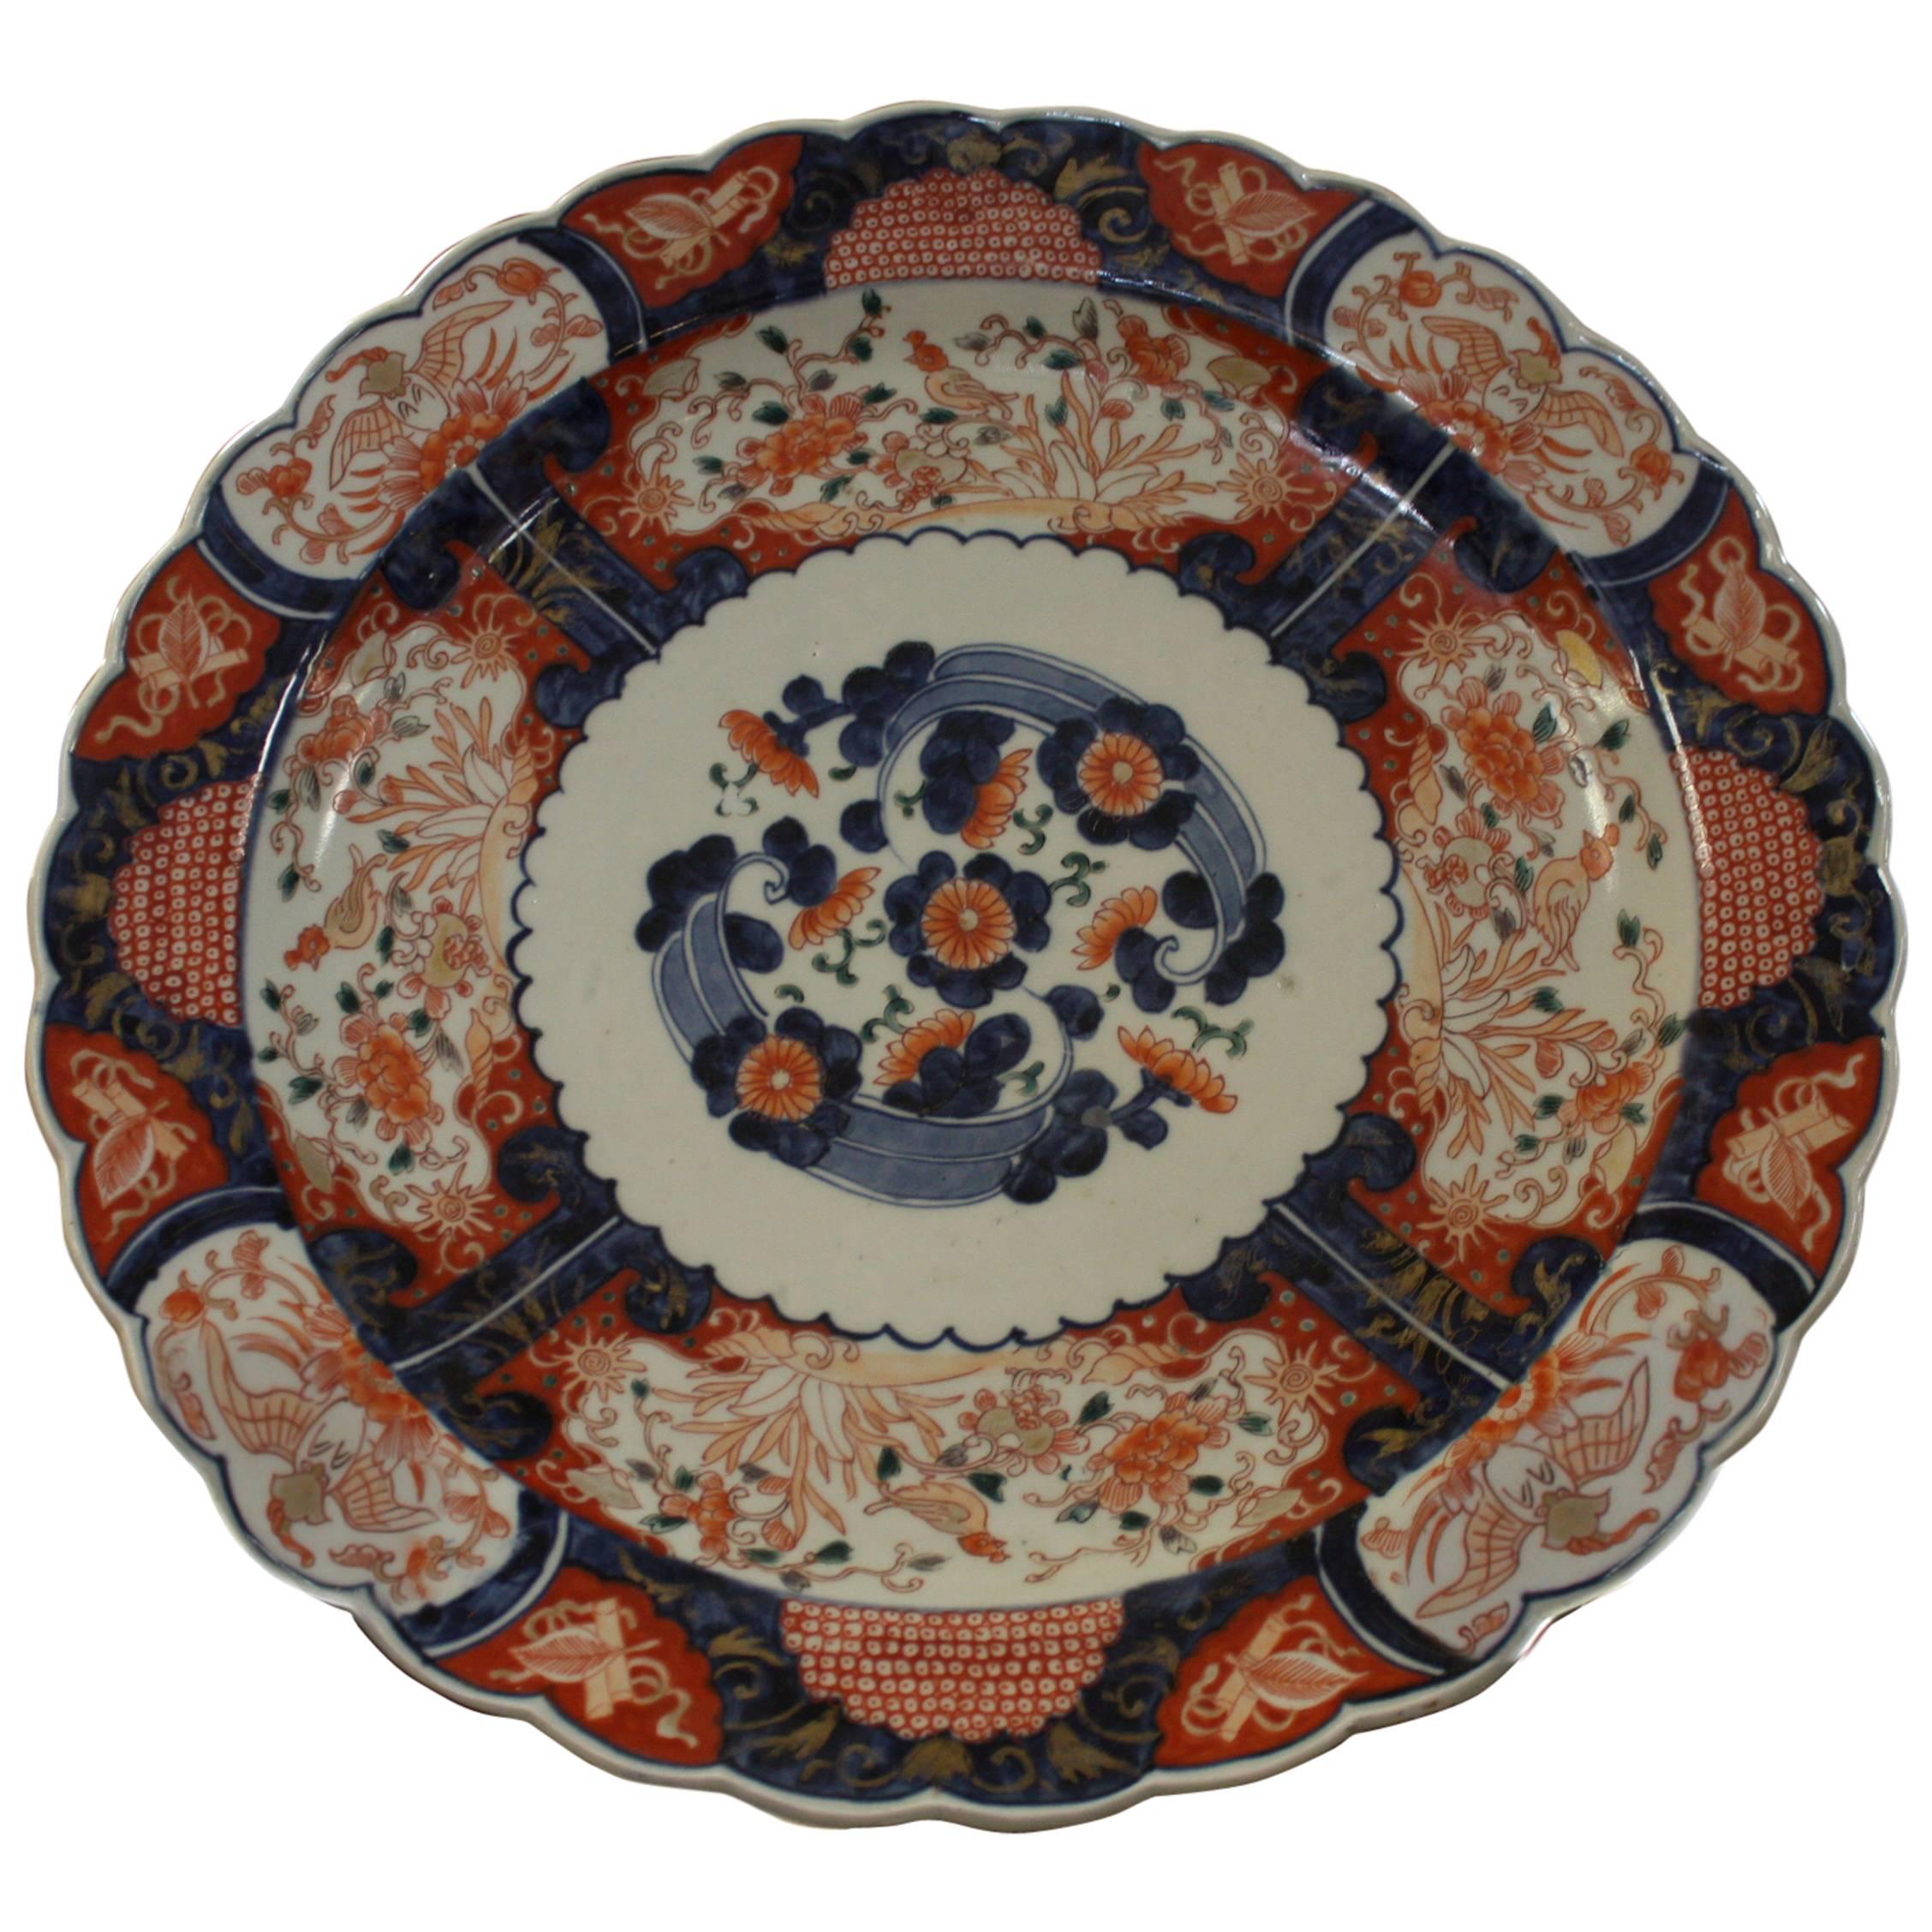 Collection of Antique Japanese Imari Plates